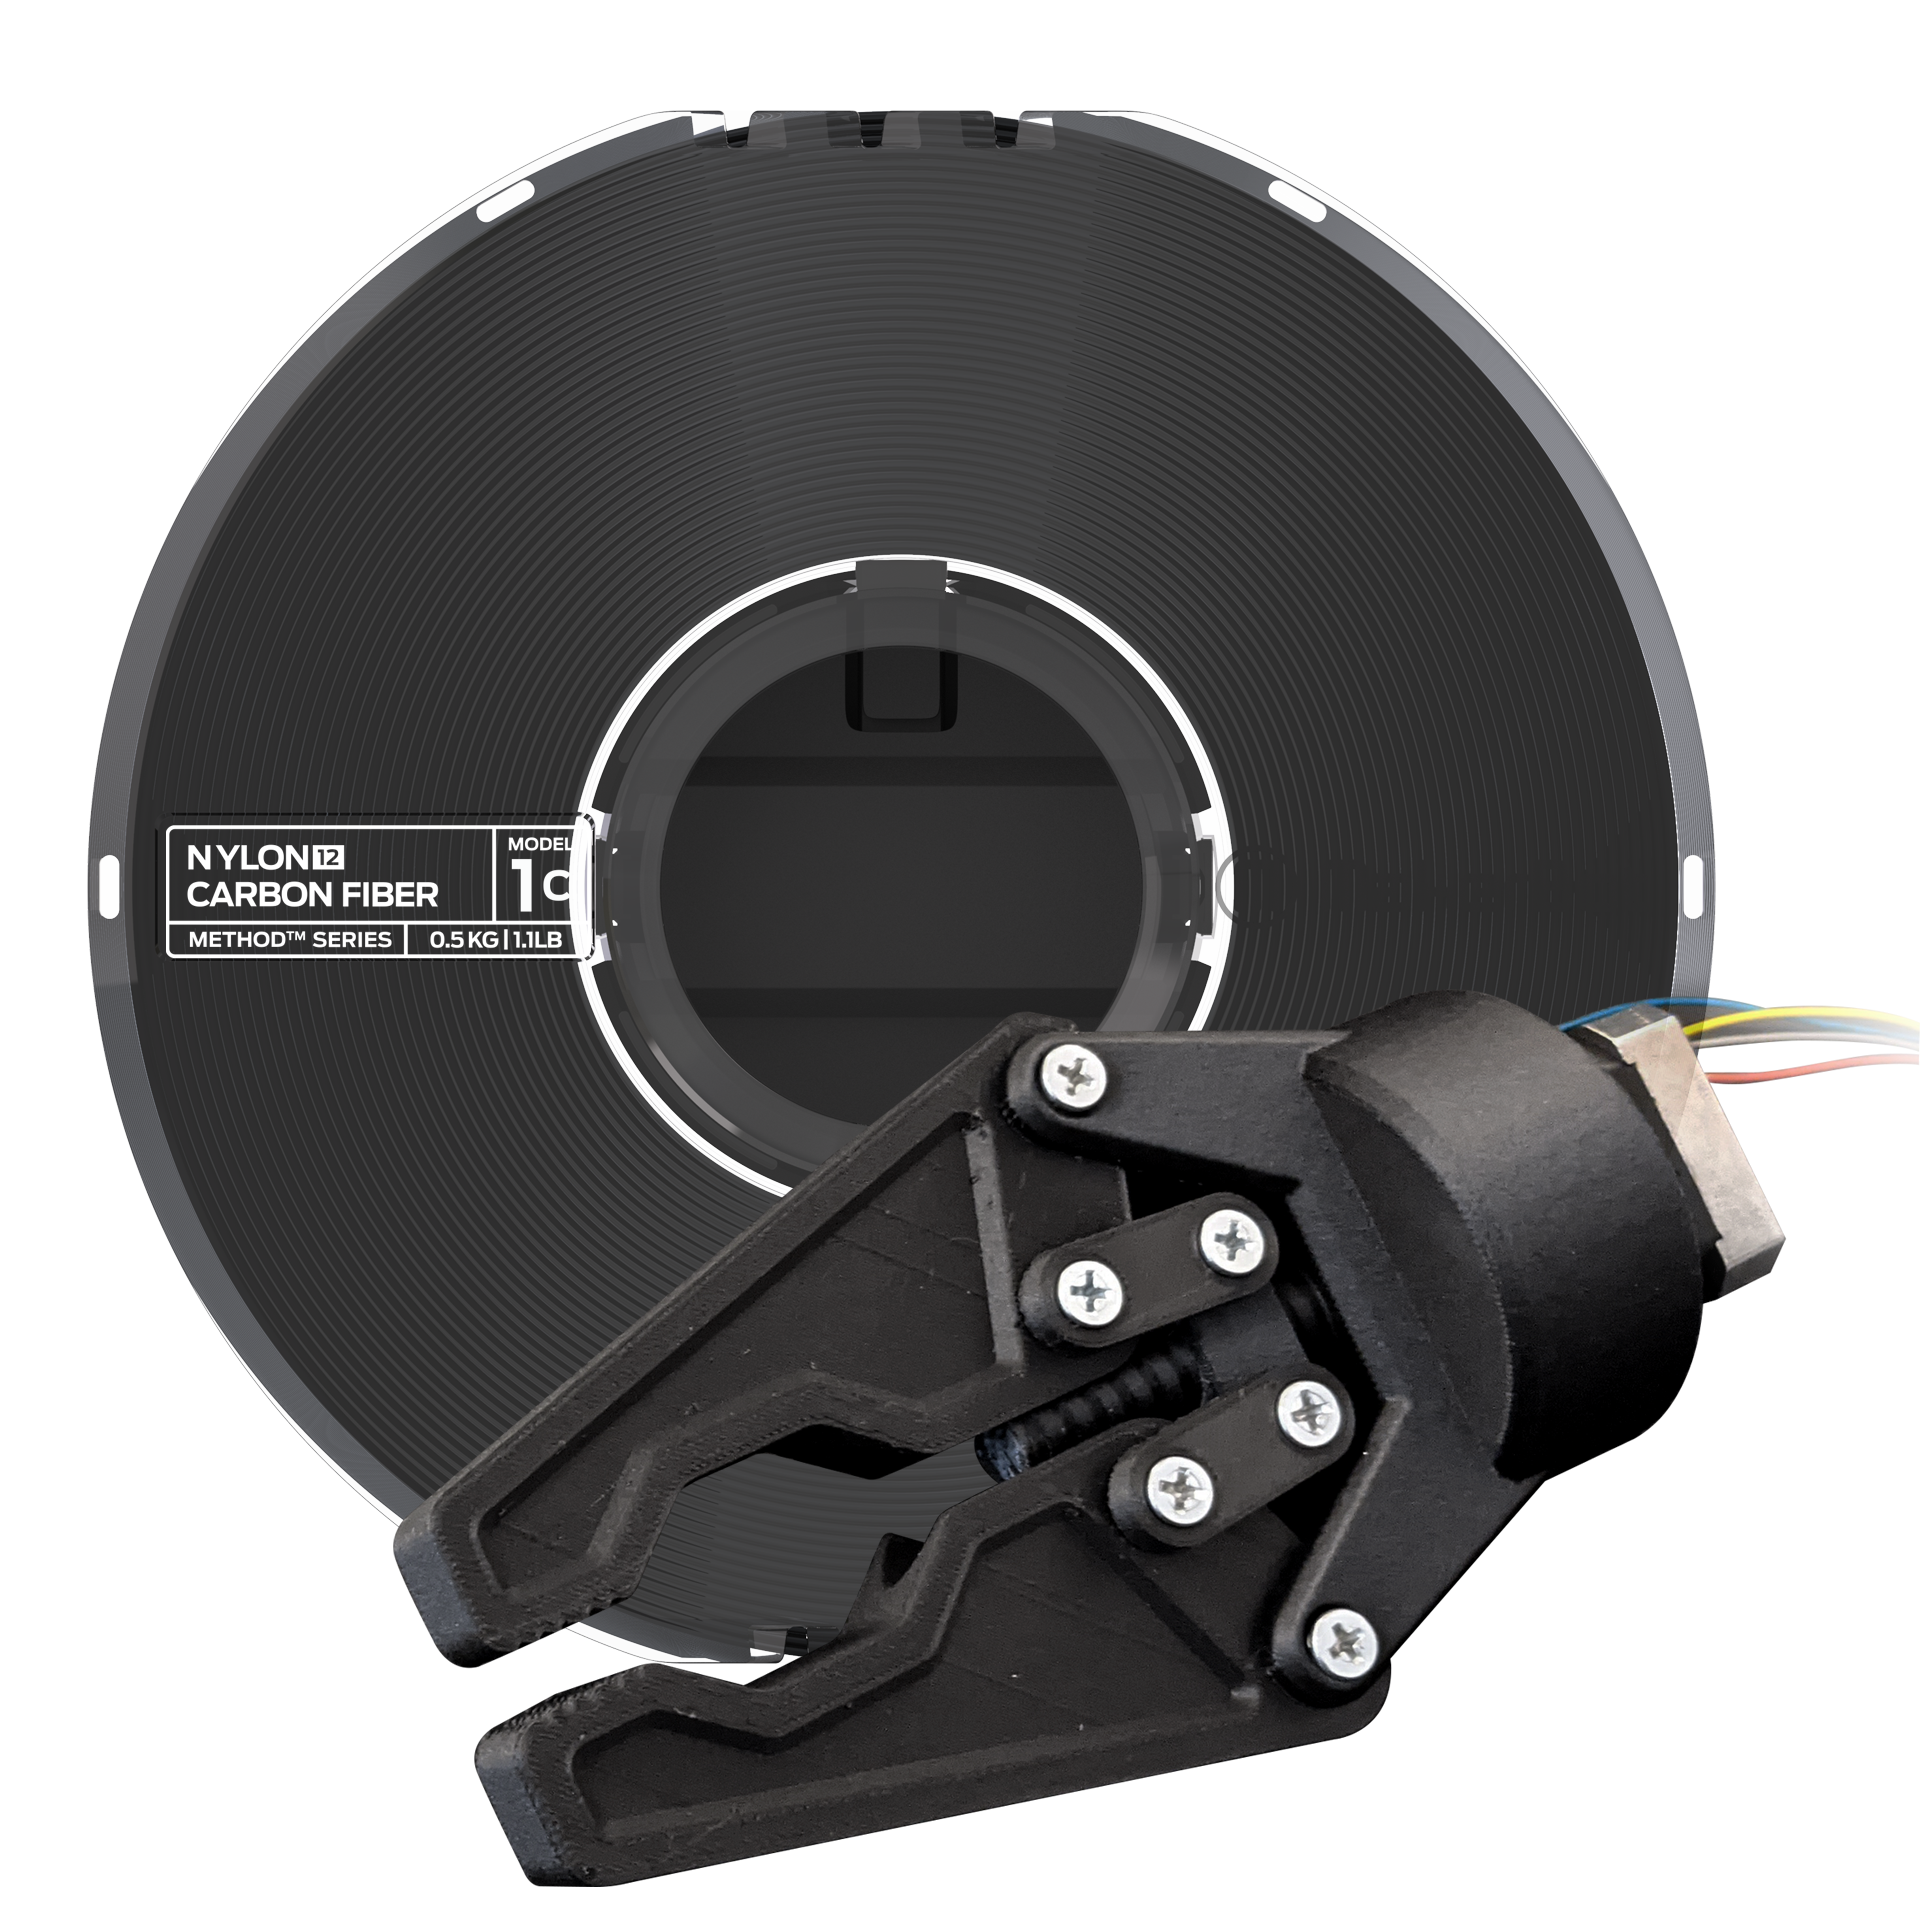 Makerbot - Method - Nylon 12 CF - Black - 500g